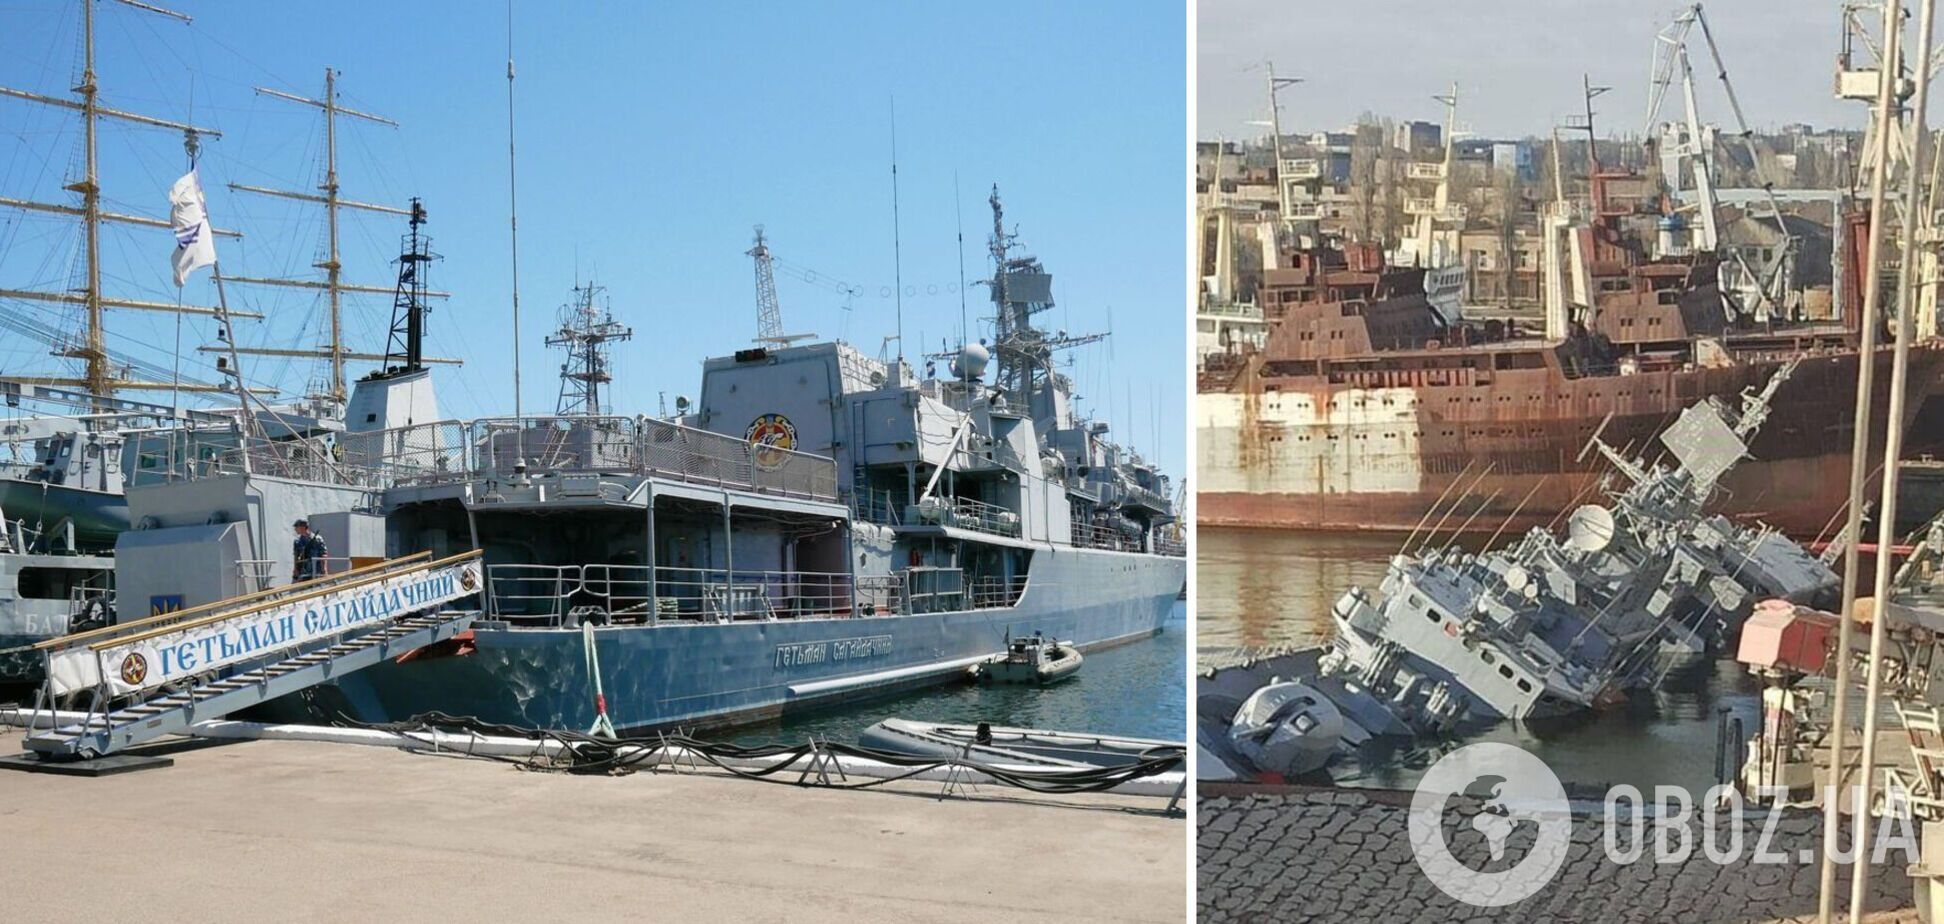 Флагман ВМС Украины 'Гетьман Сагайдачный' затоплен. Фото